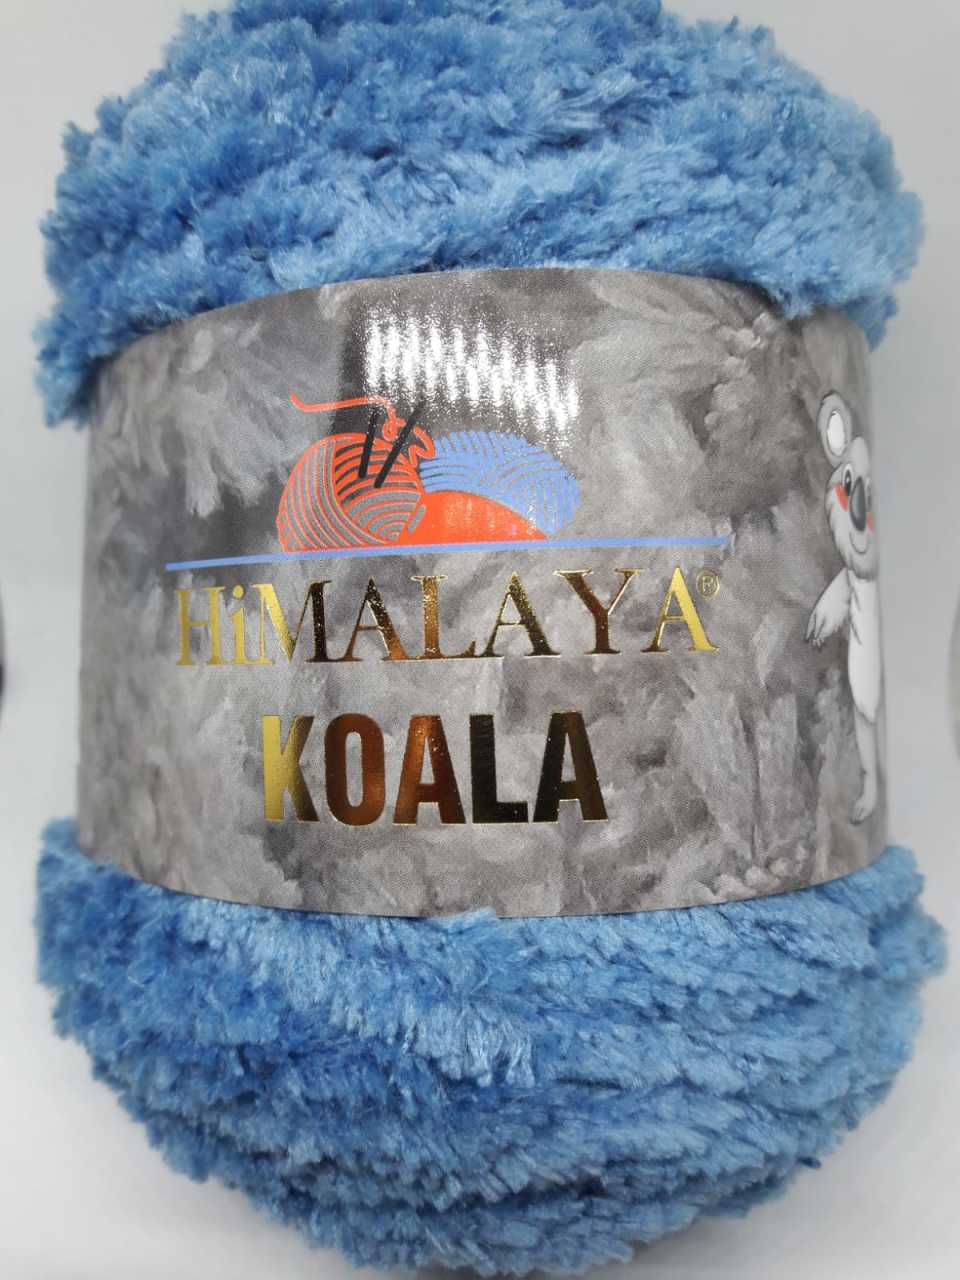 Himalaya koala 75727